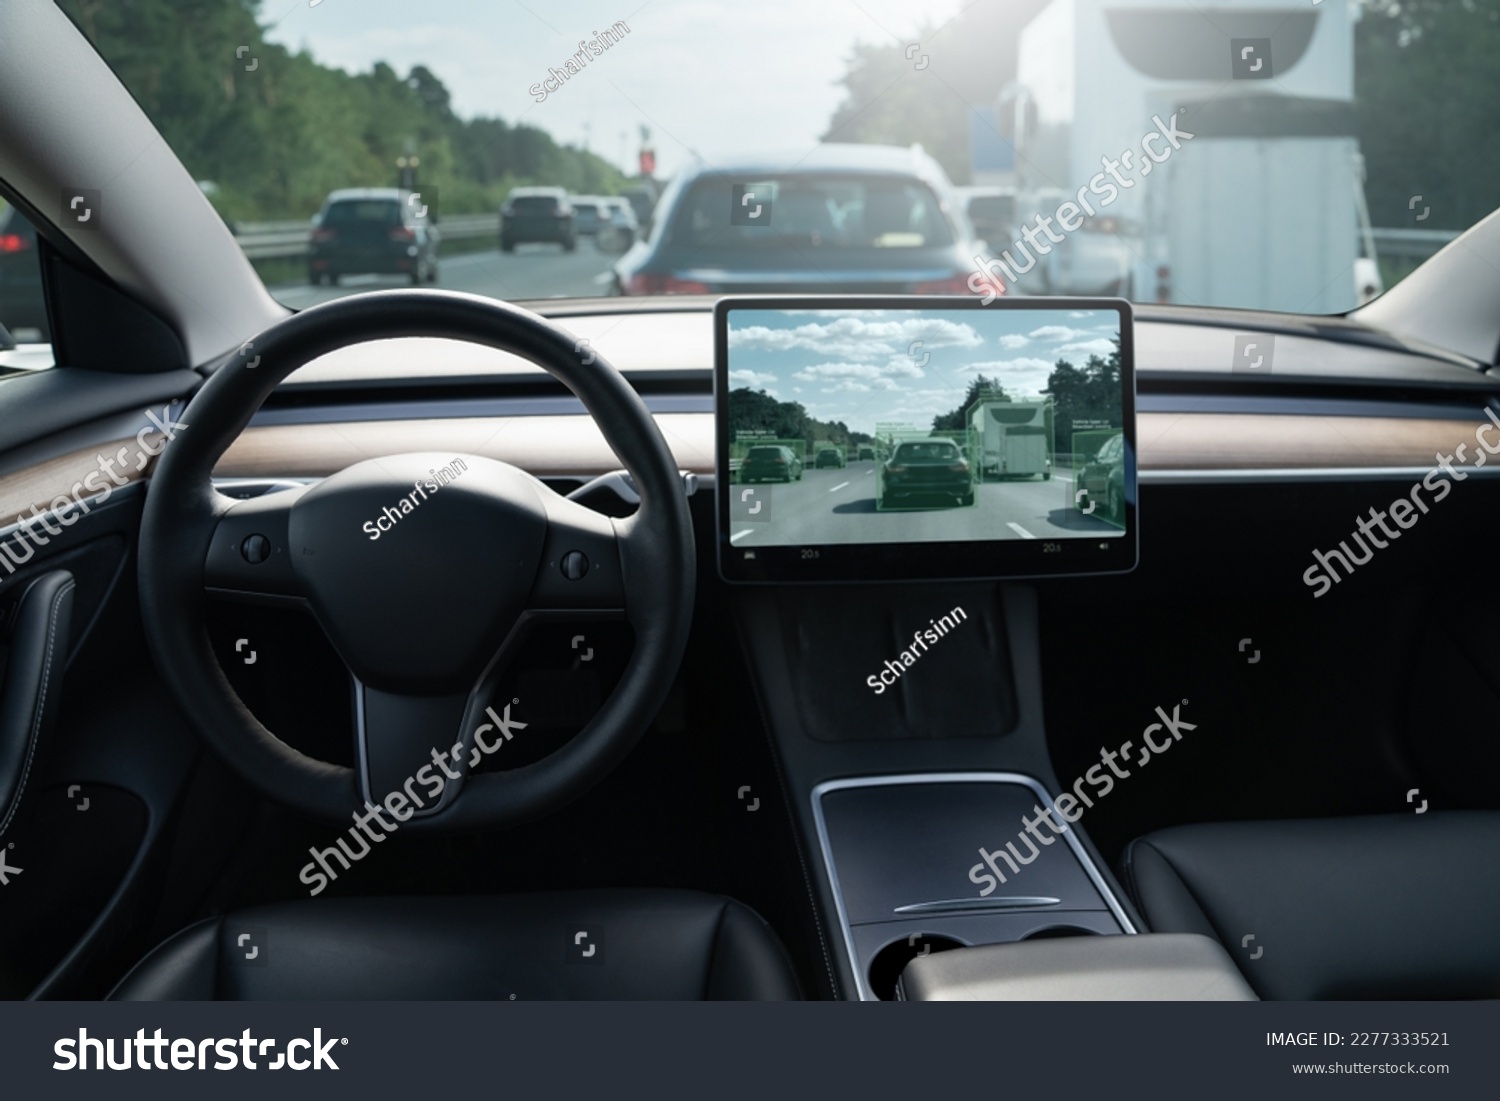 Self driving car on a road. Autonomous vehicle. Inside view. #2277333521